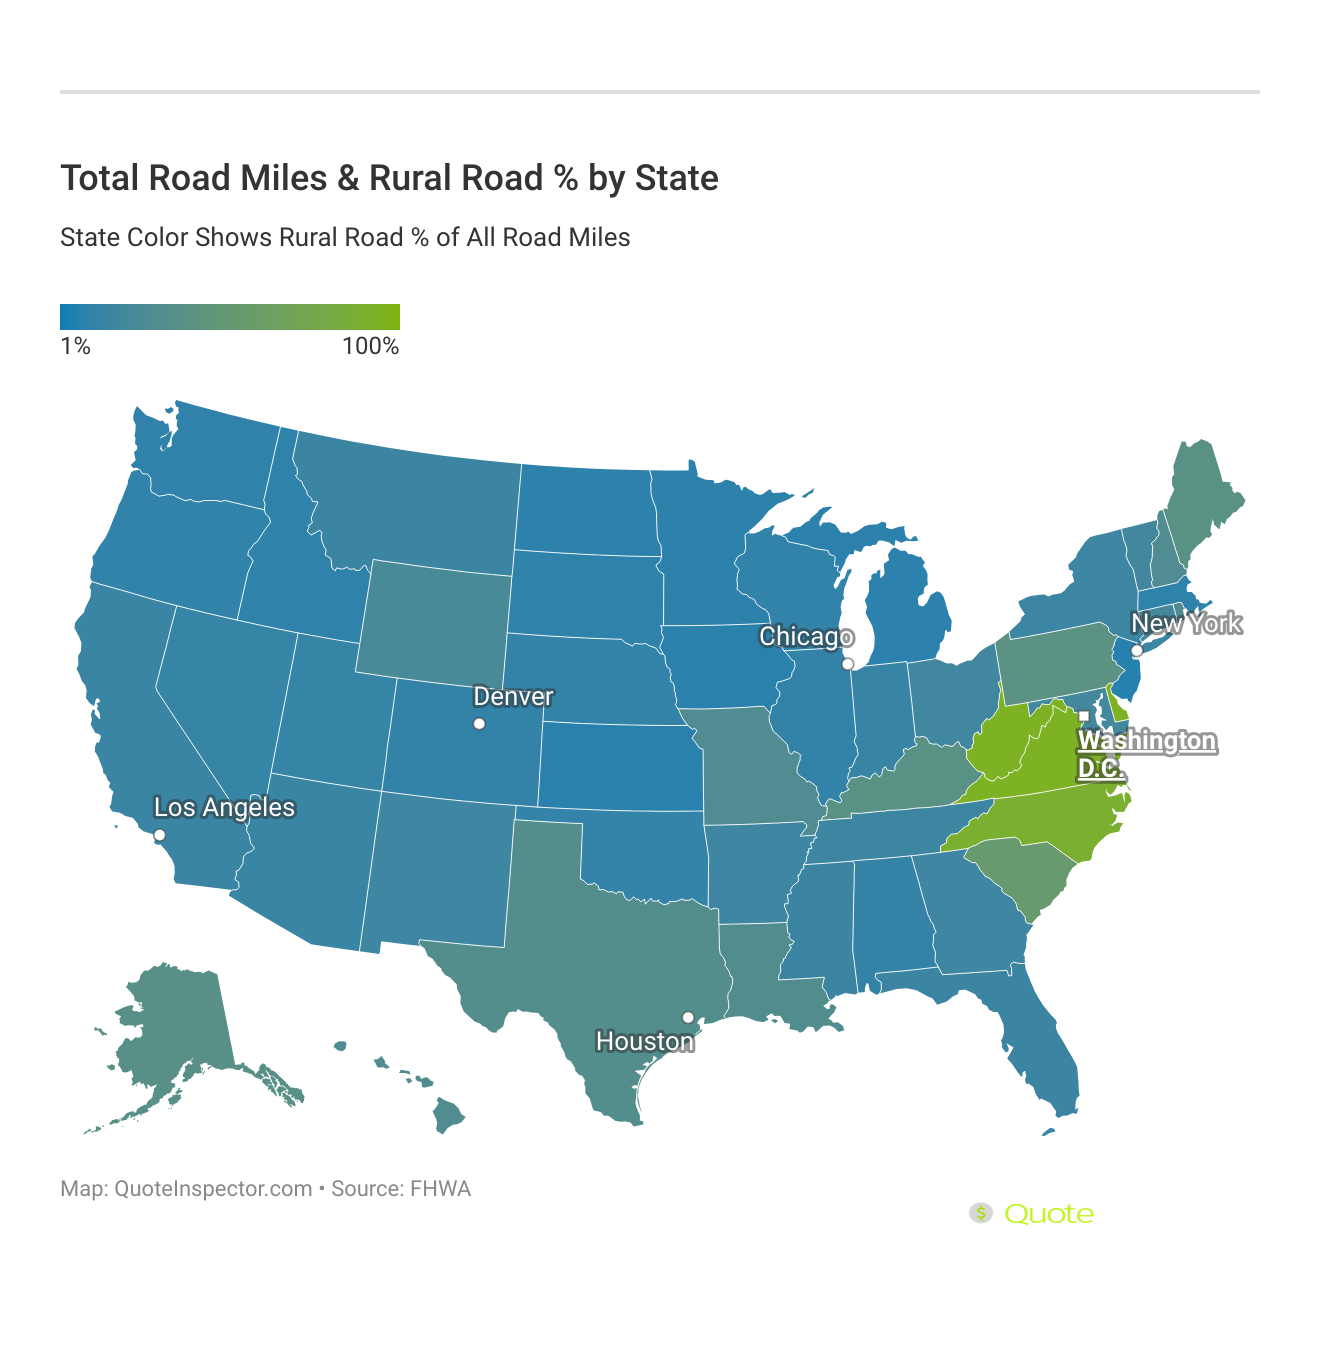 <h3>Total Road Miles & Rural Road % by State</h3>